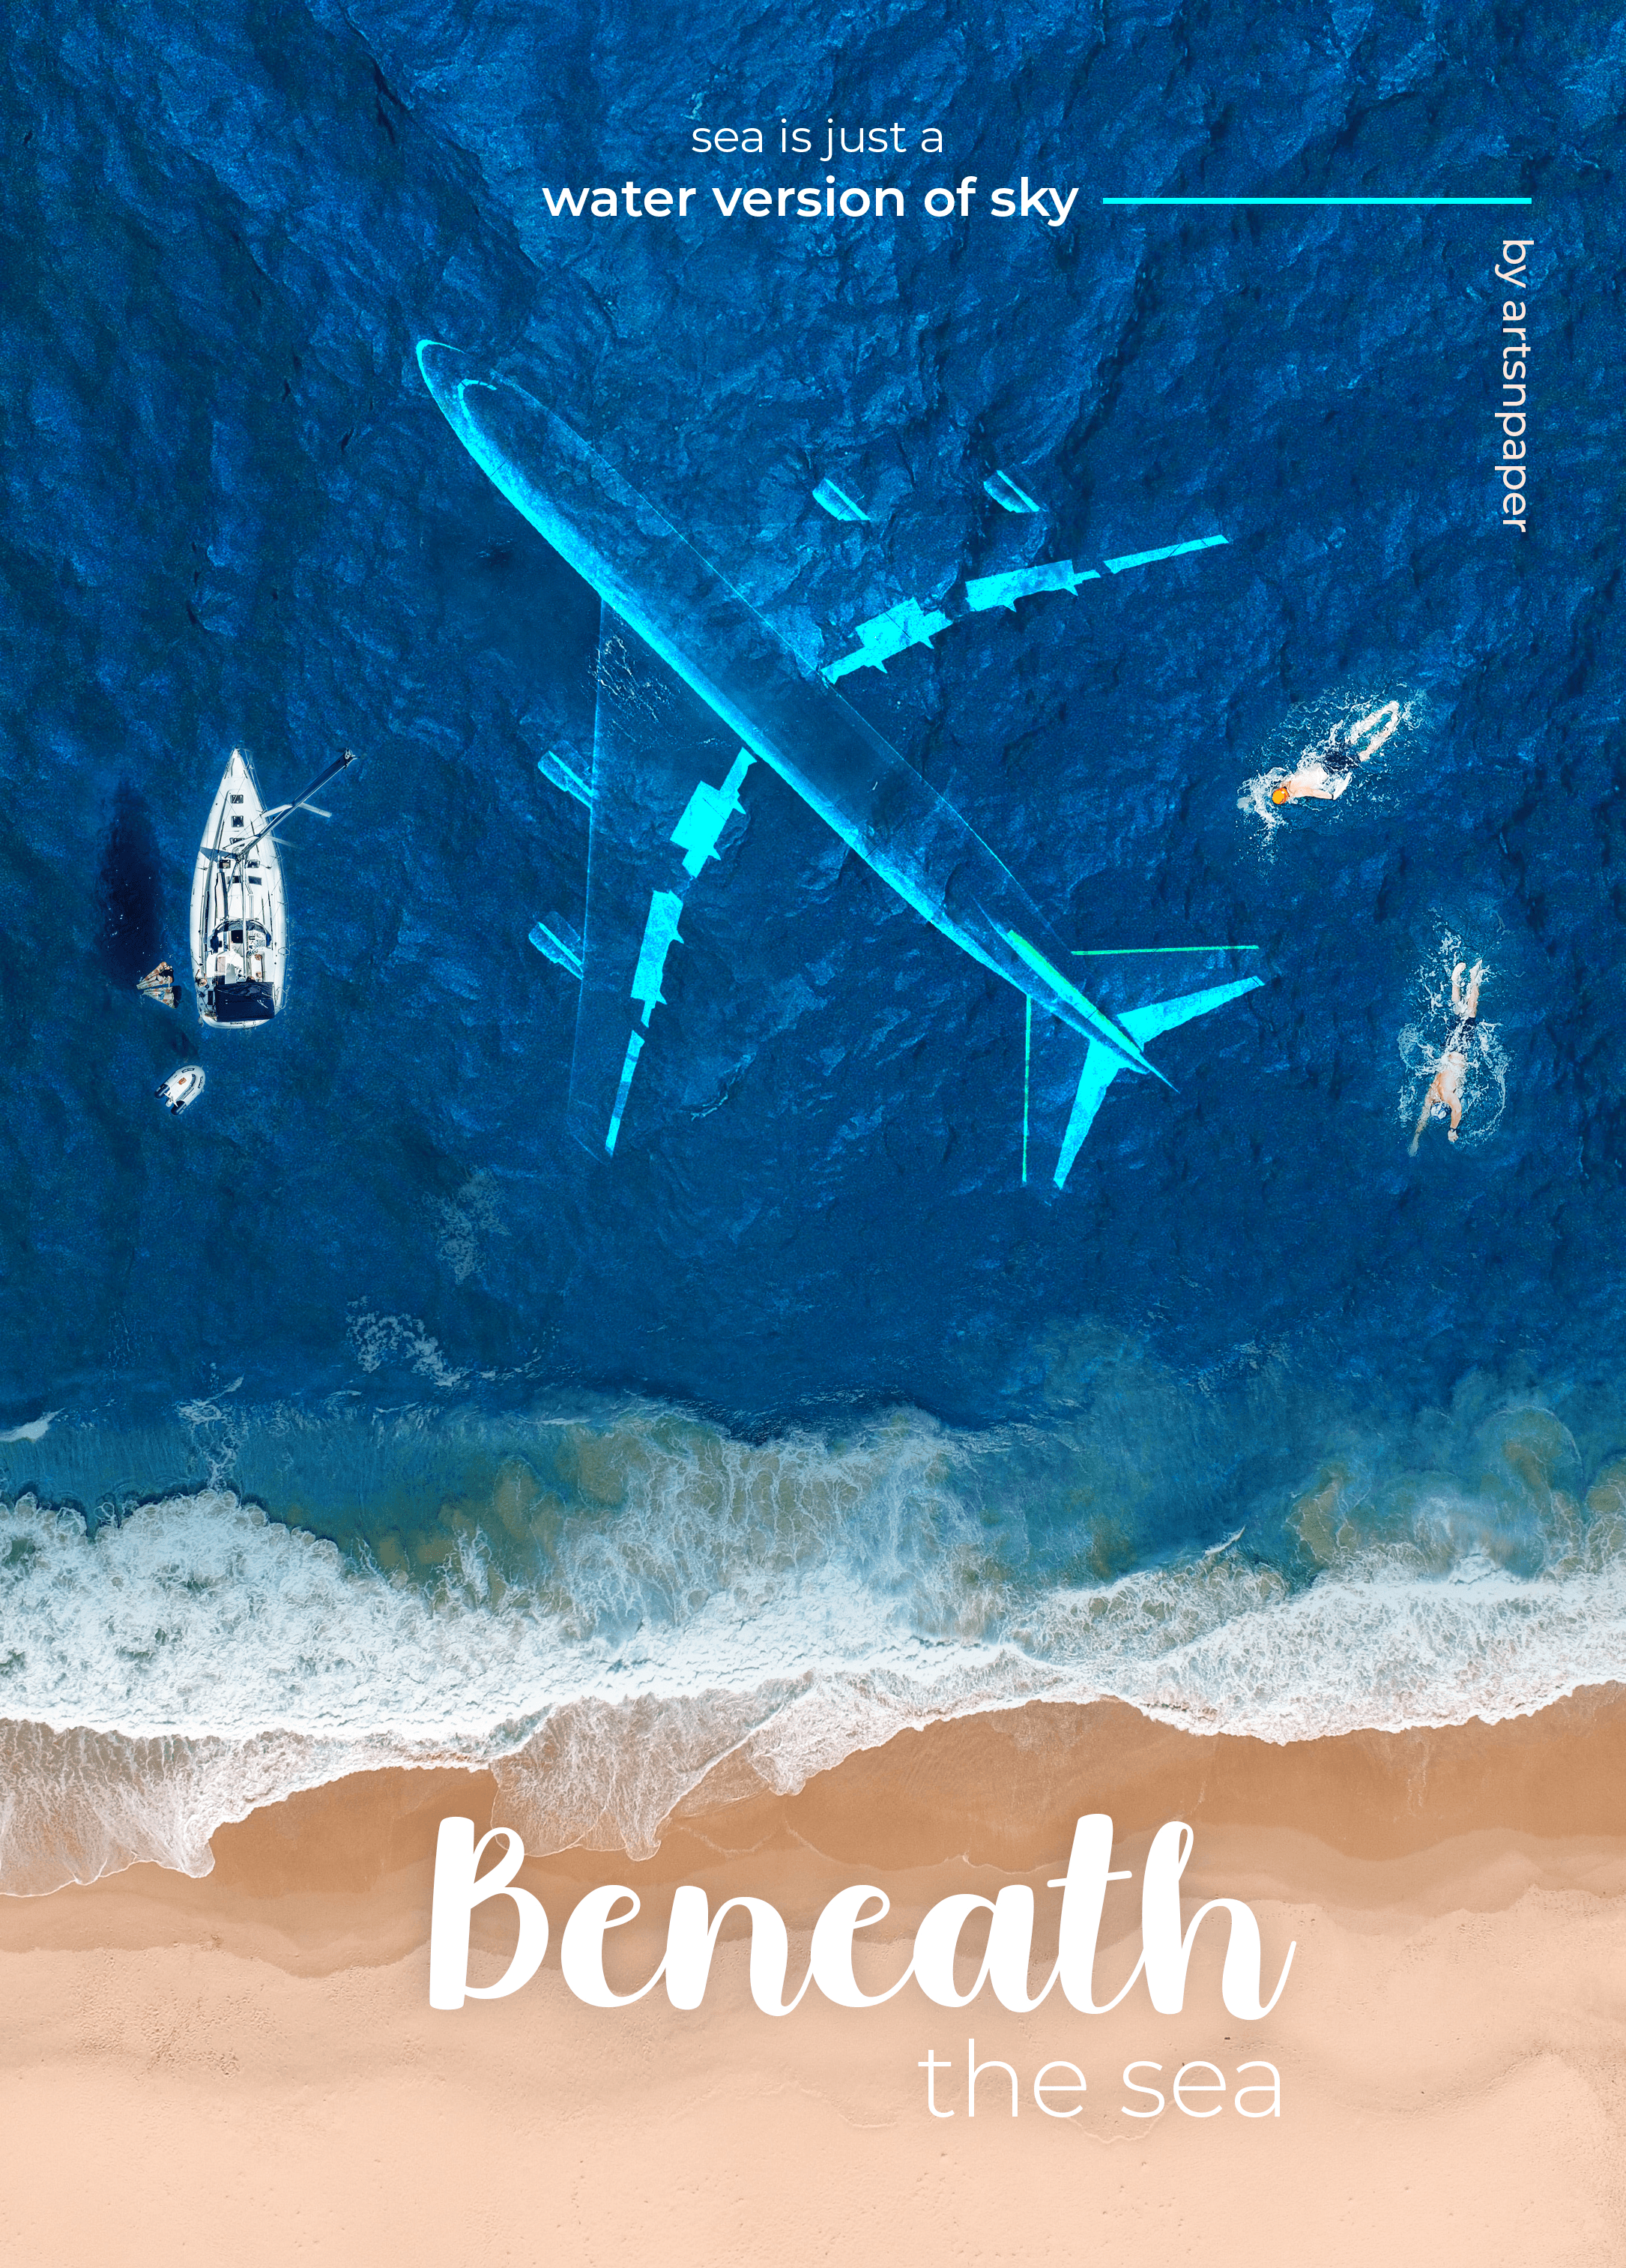 Beneath the sea